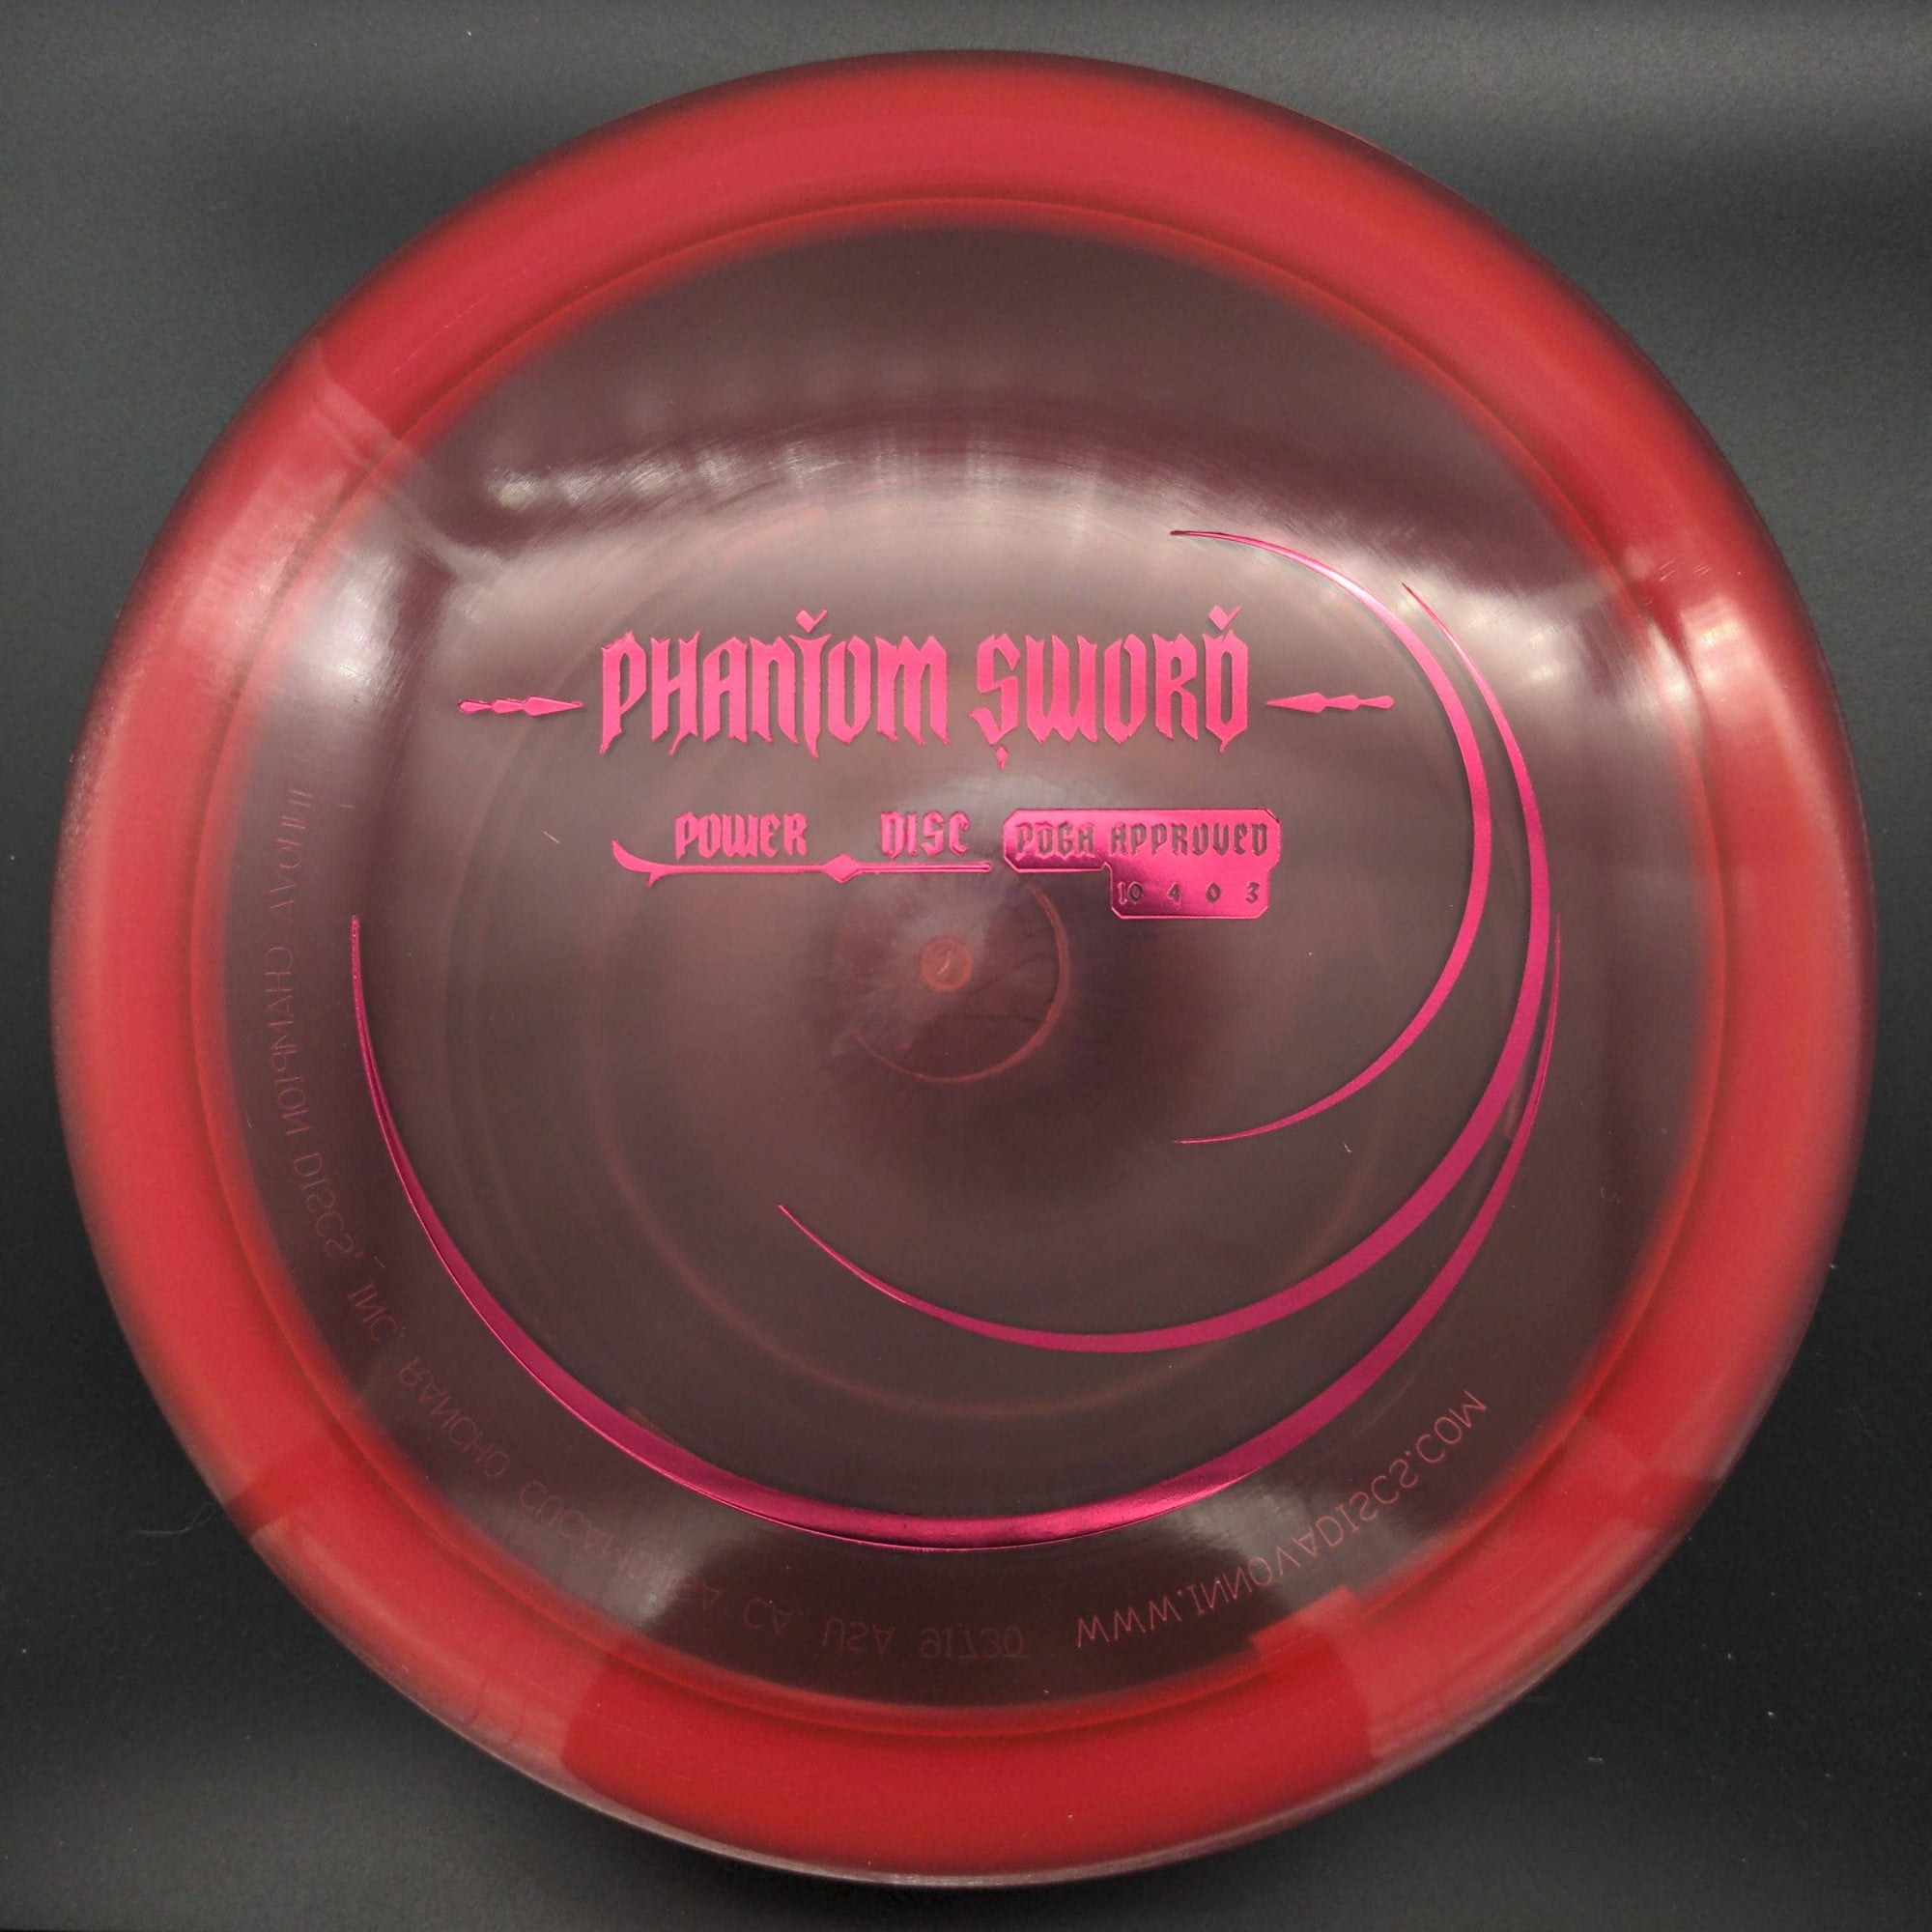 Gem Discs Power Disc (Phantom Sword)